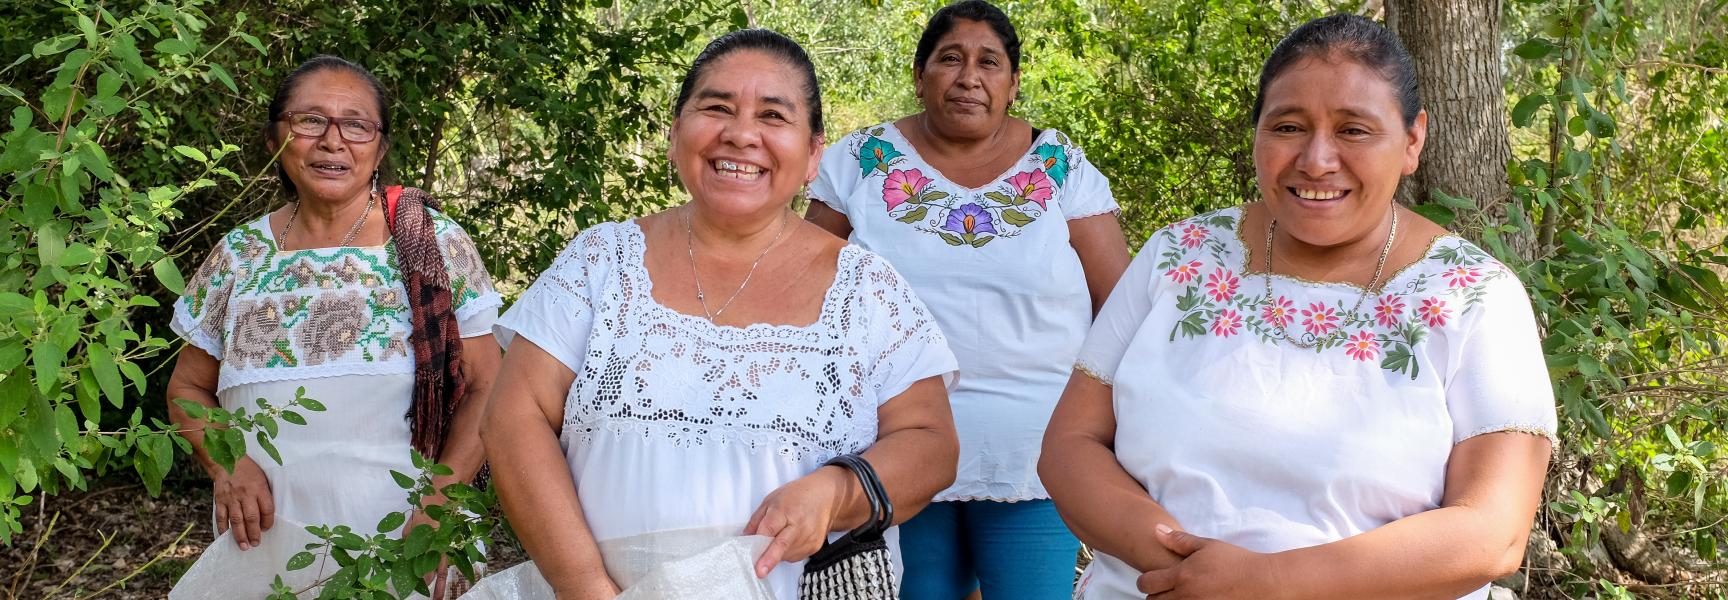 Mujeres rurales en México